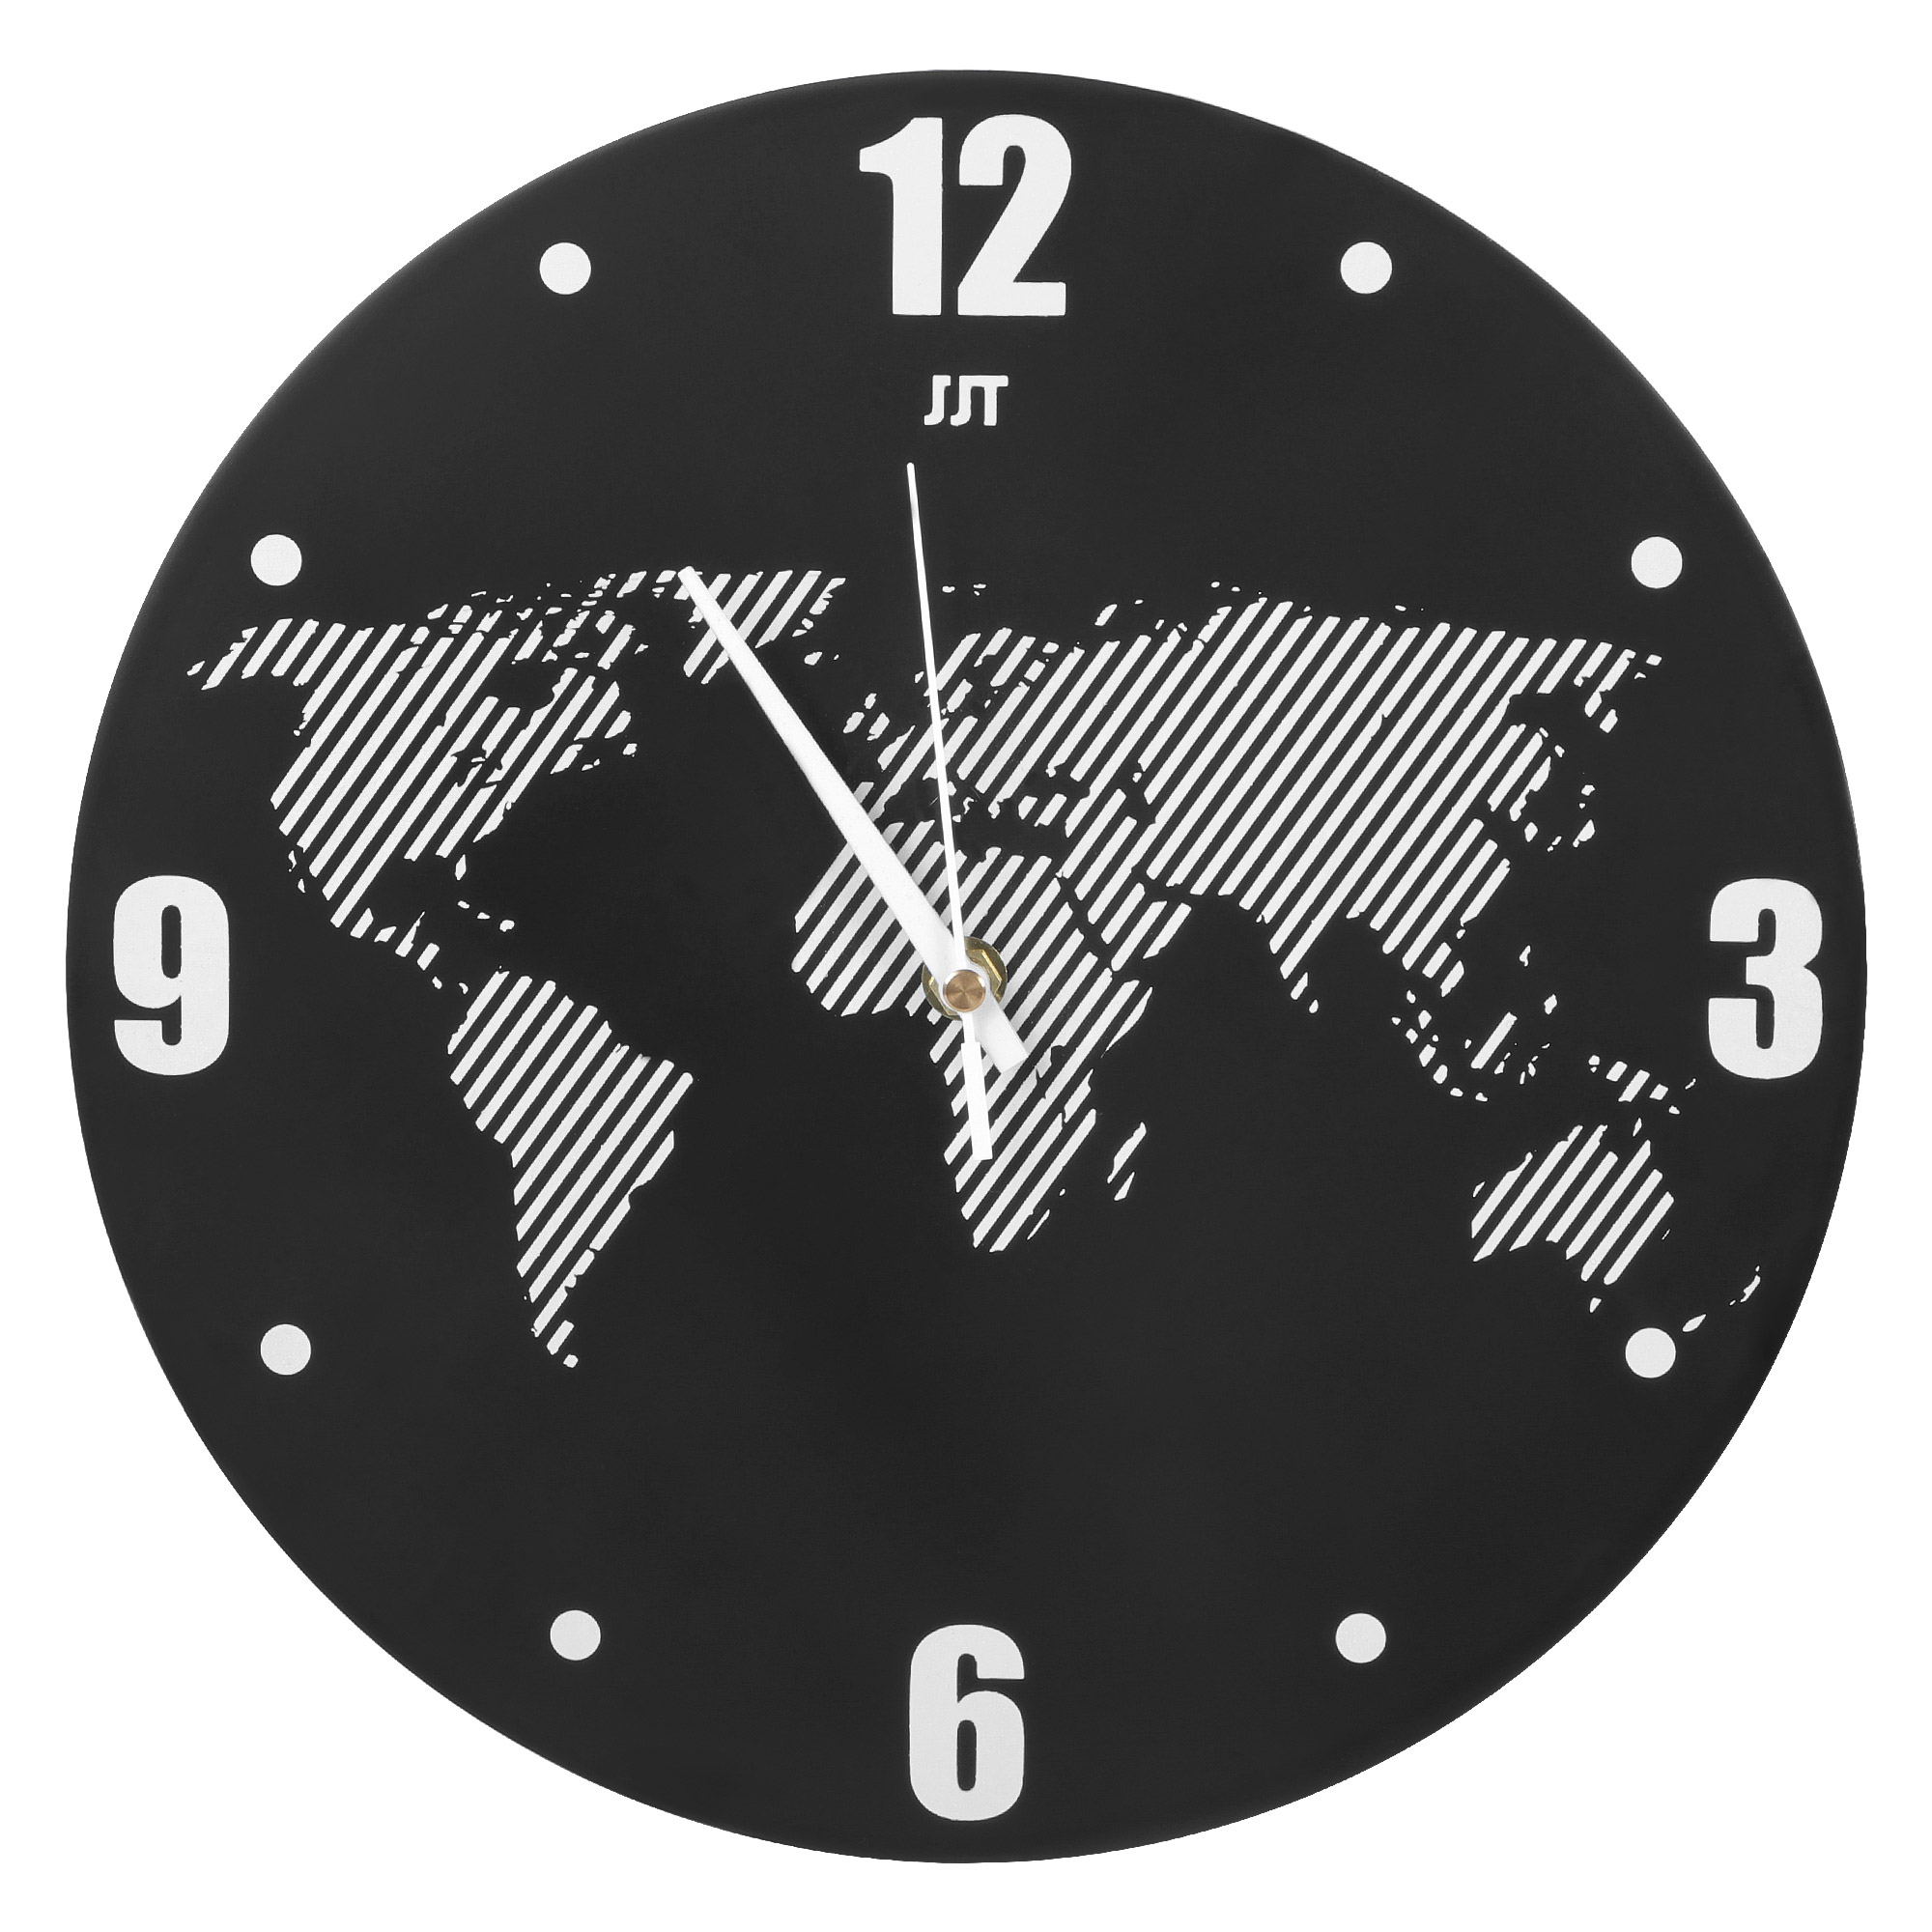 Часы настенные JJT Карта мира 29х29 см часы электронные настенные настольные будильник термометр календарь d 30 см